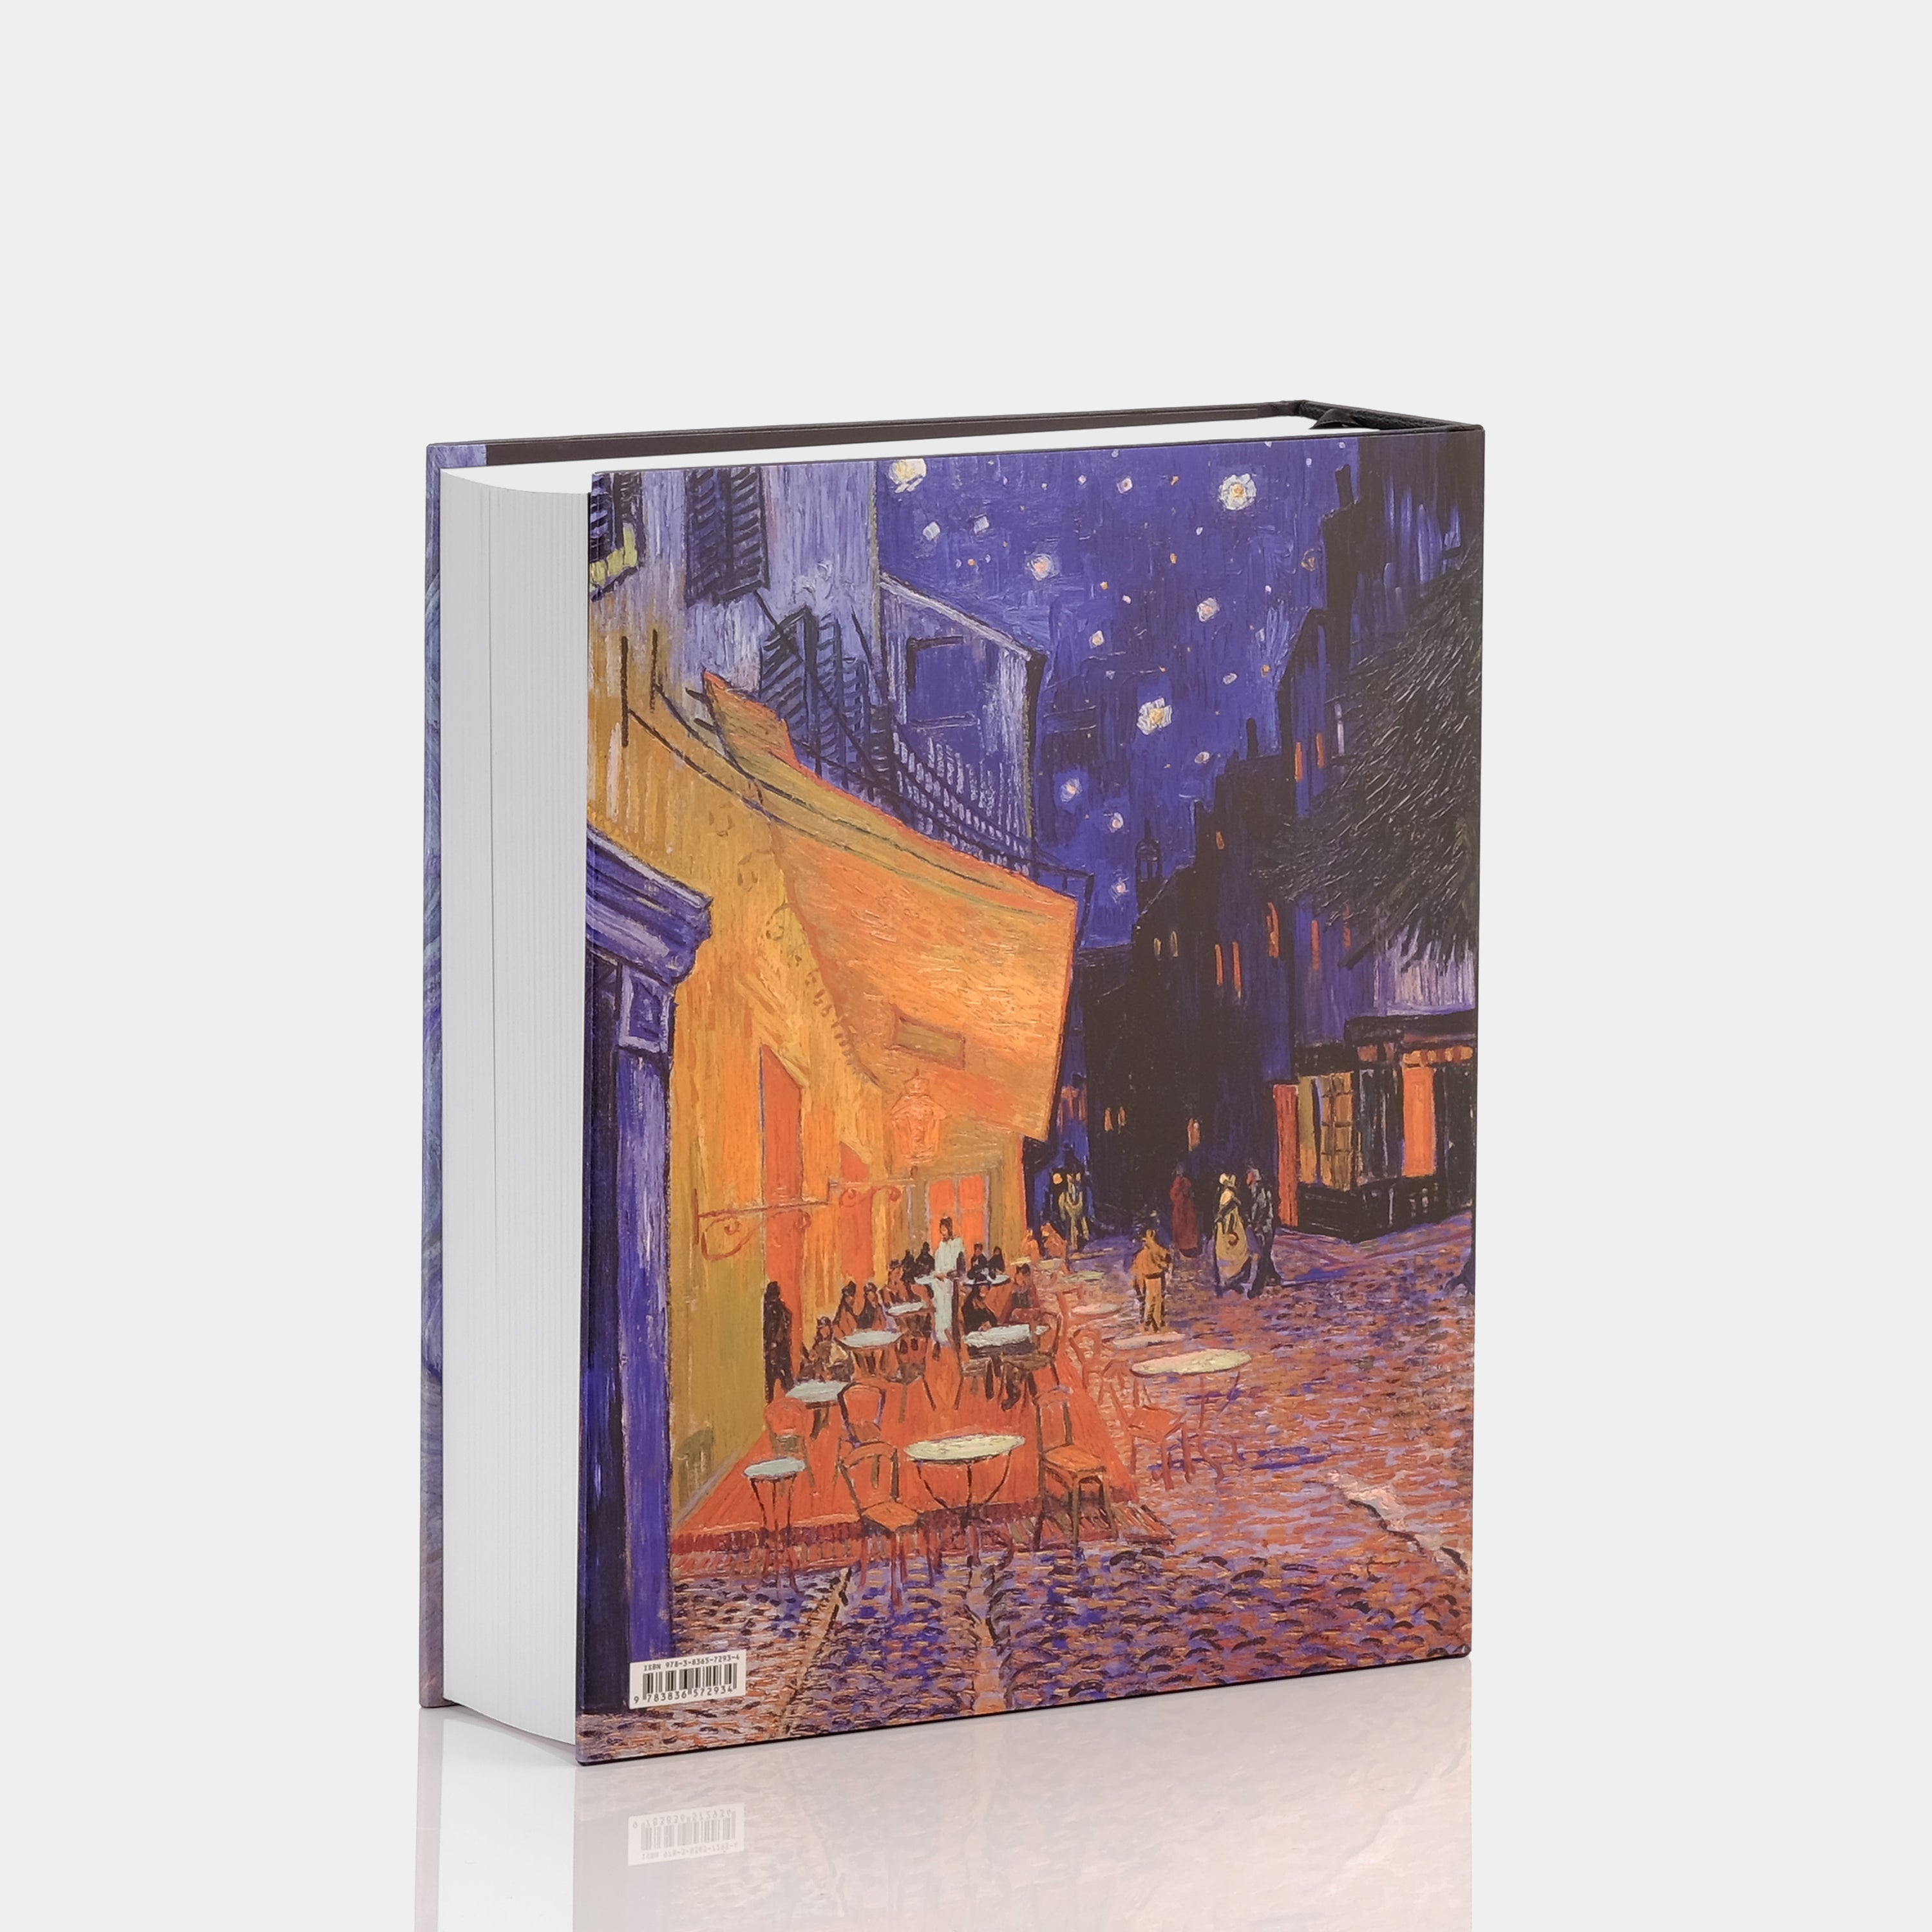 Van Gogh: The Complete Paintings Taschen Book